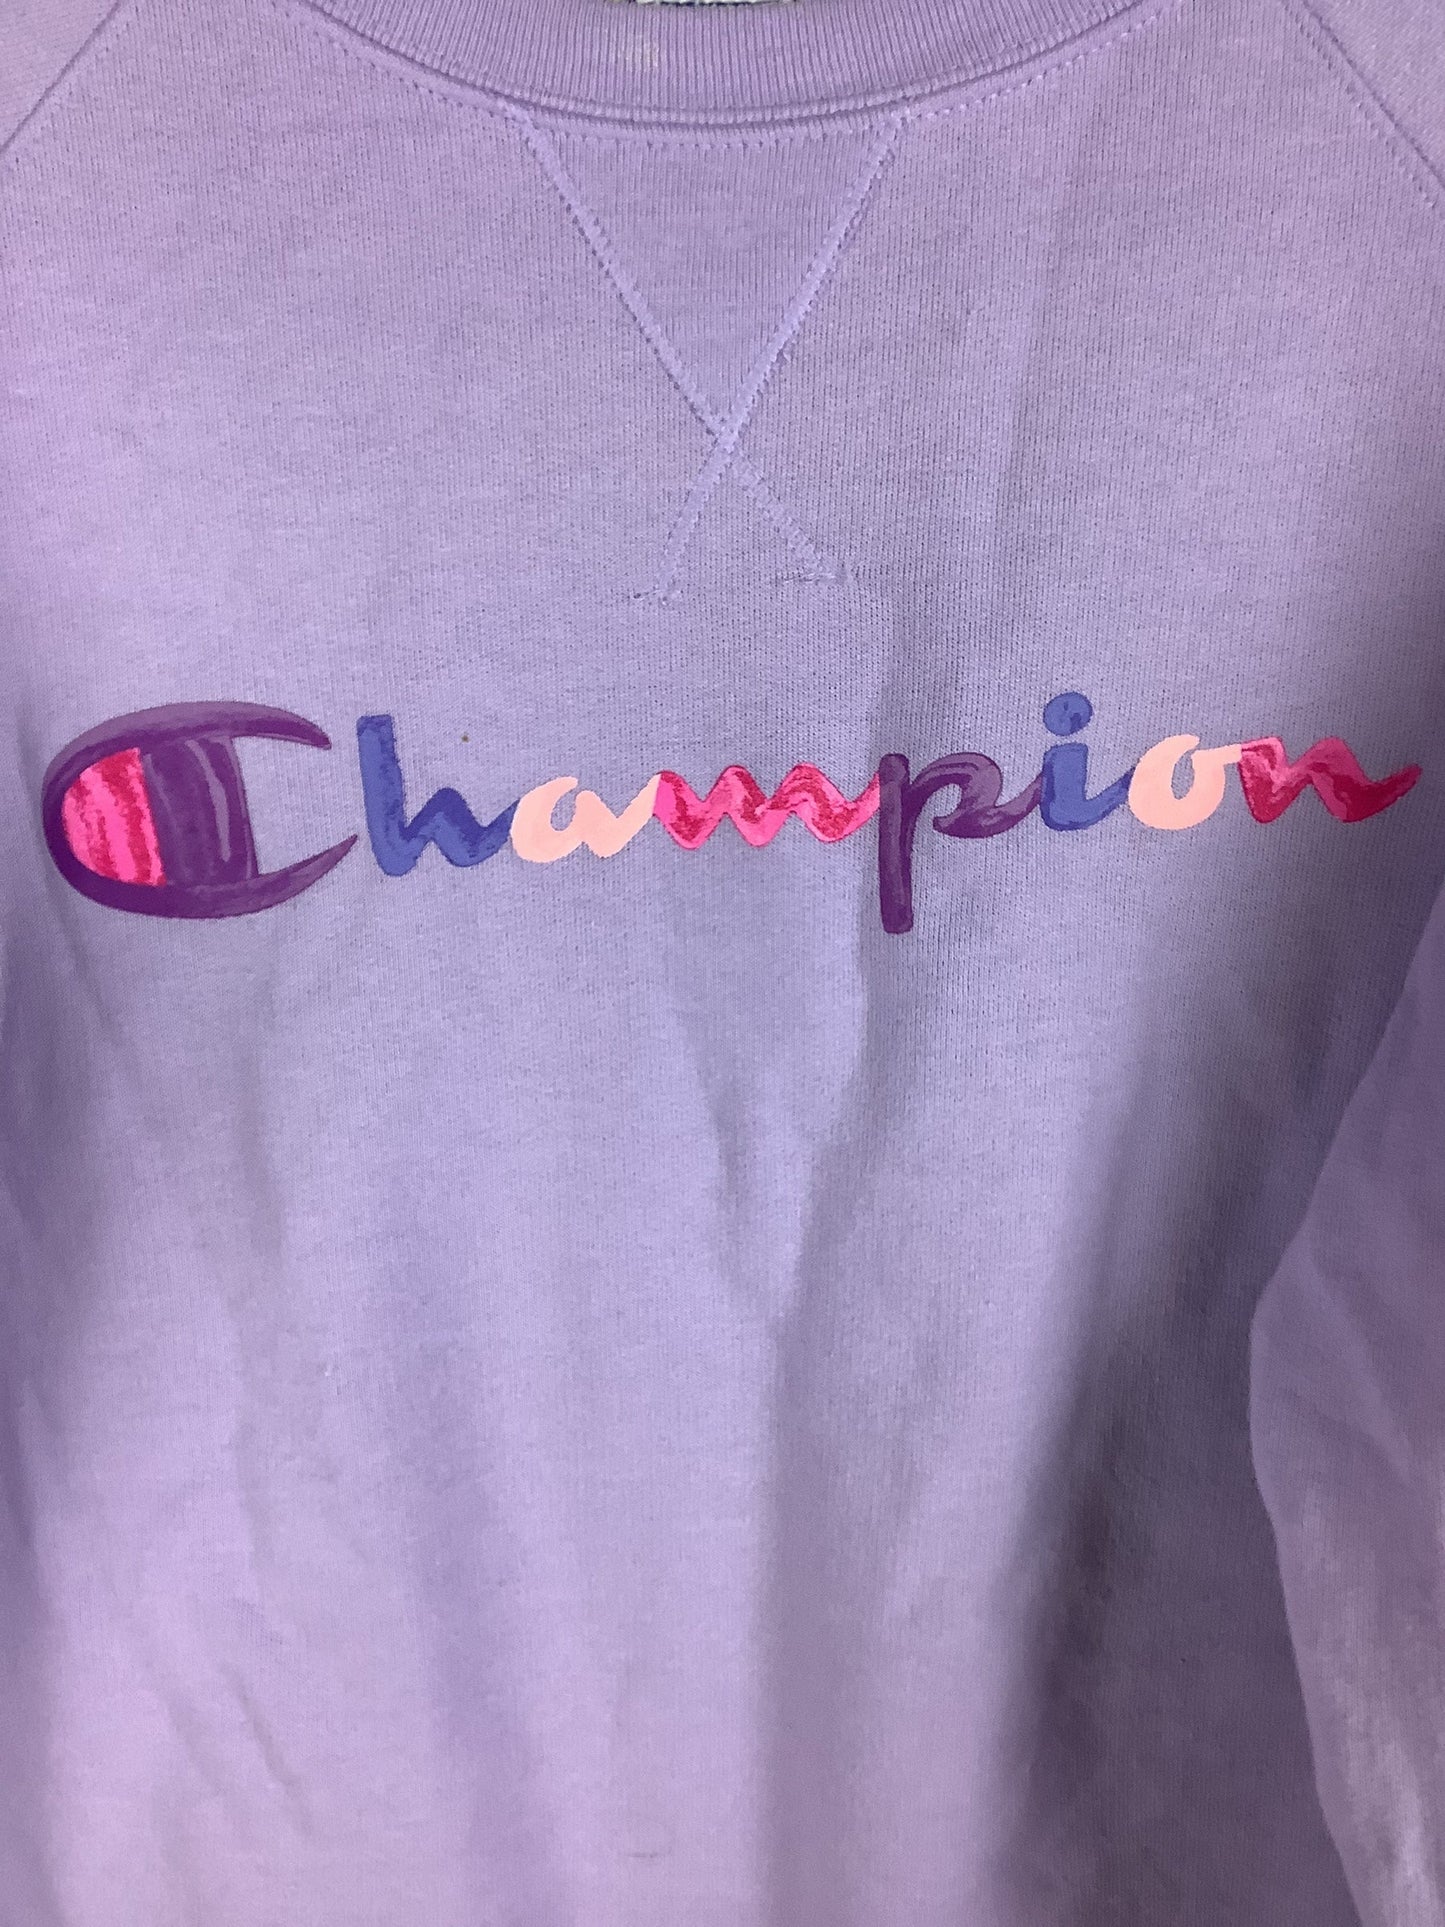 Sweatshirt By Champion  Size: L